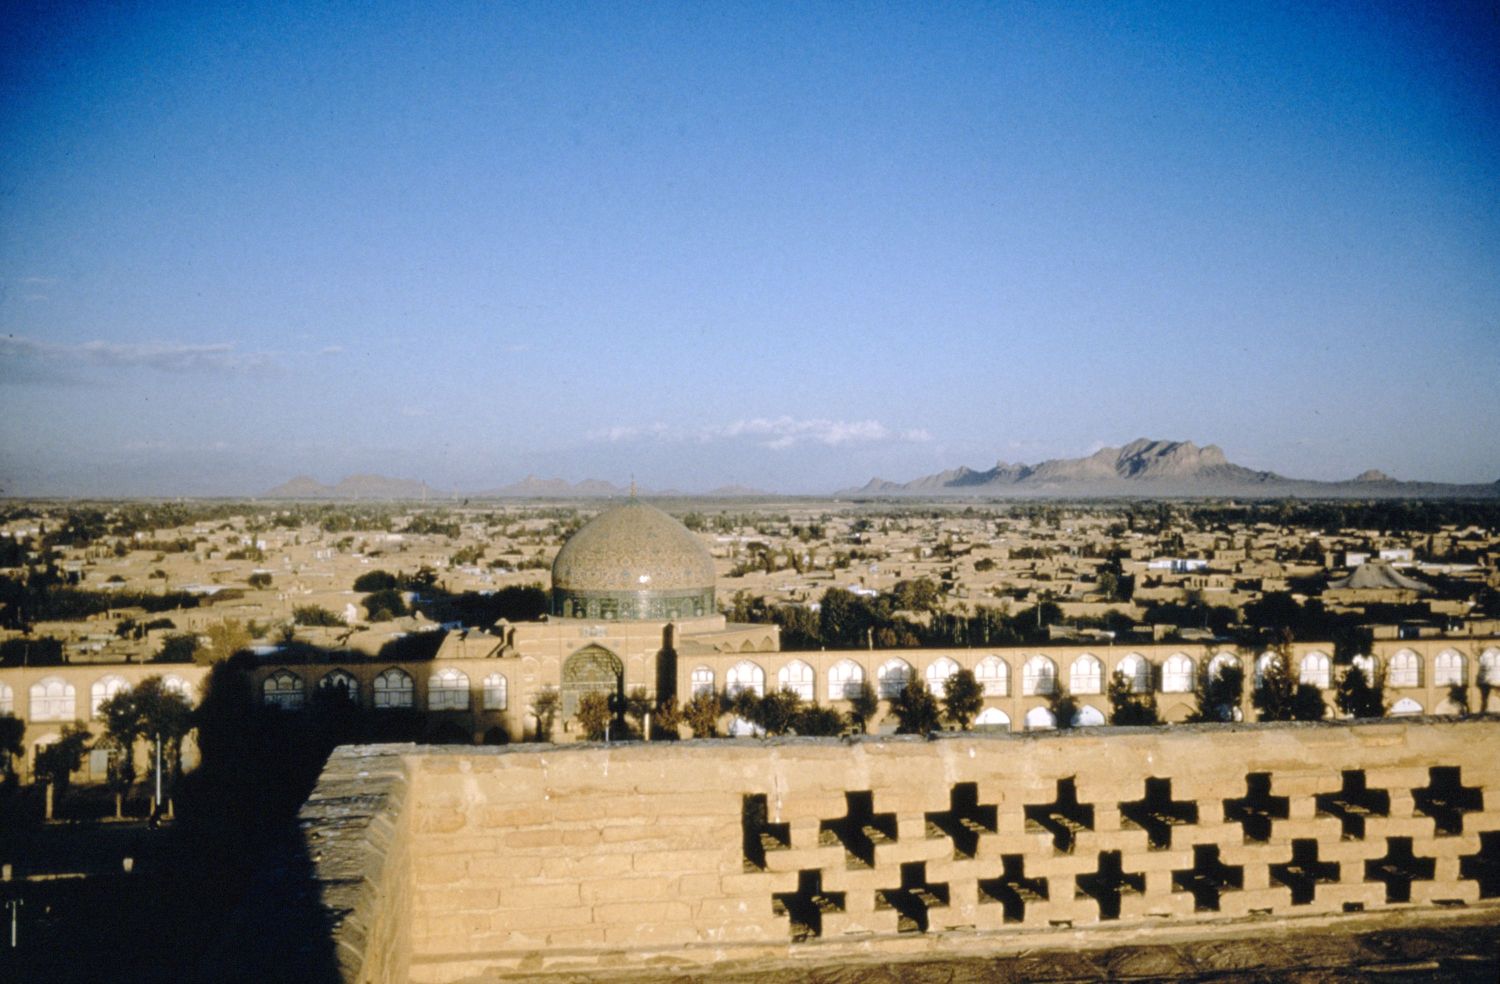  Isfahan - View over city of Isfahan, Iran, facing east from Ali Qapu.